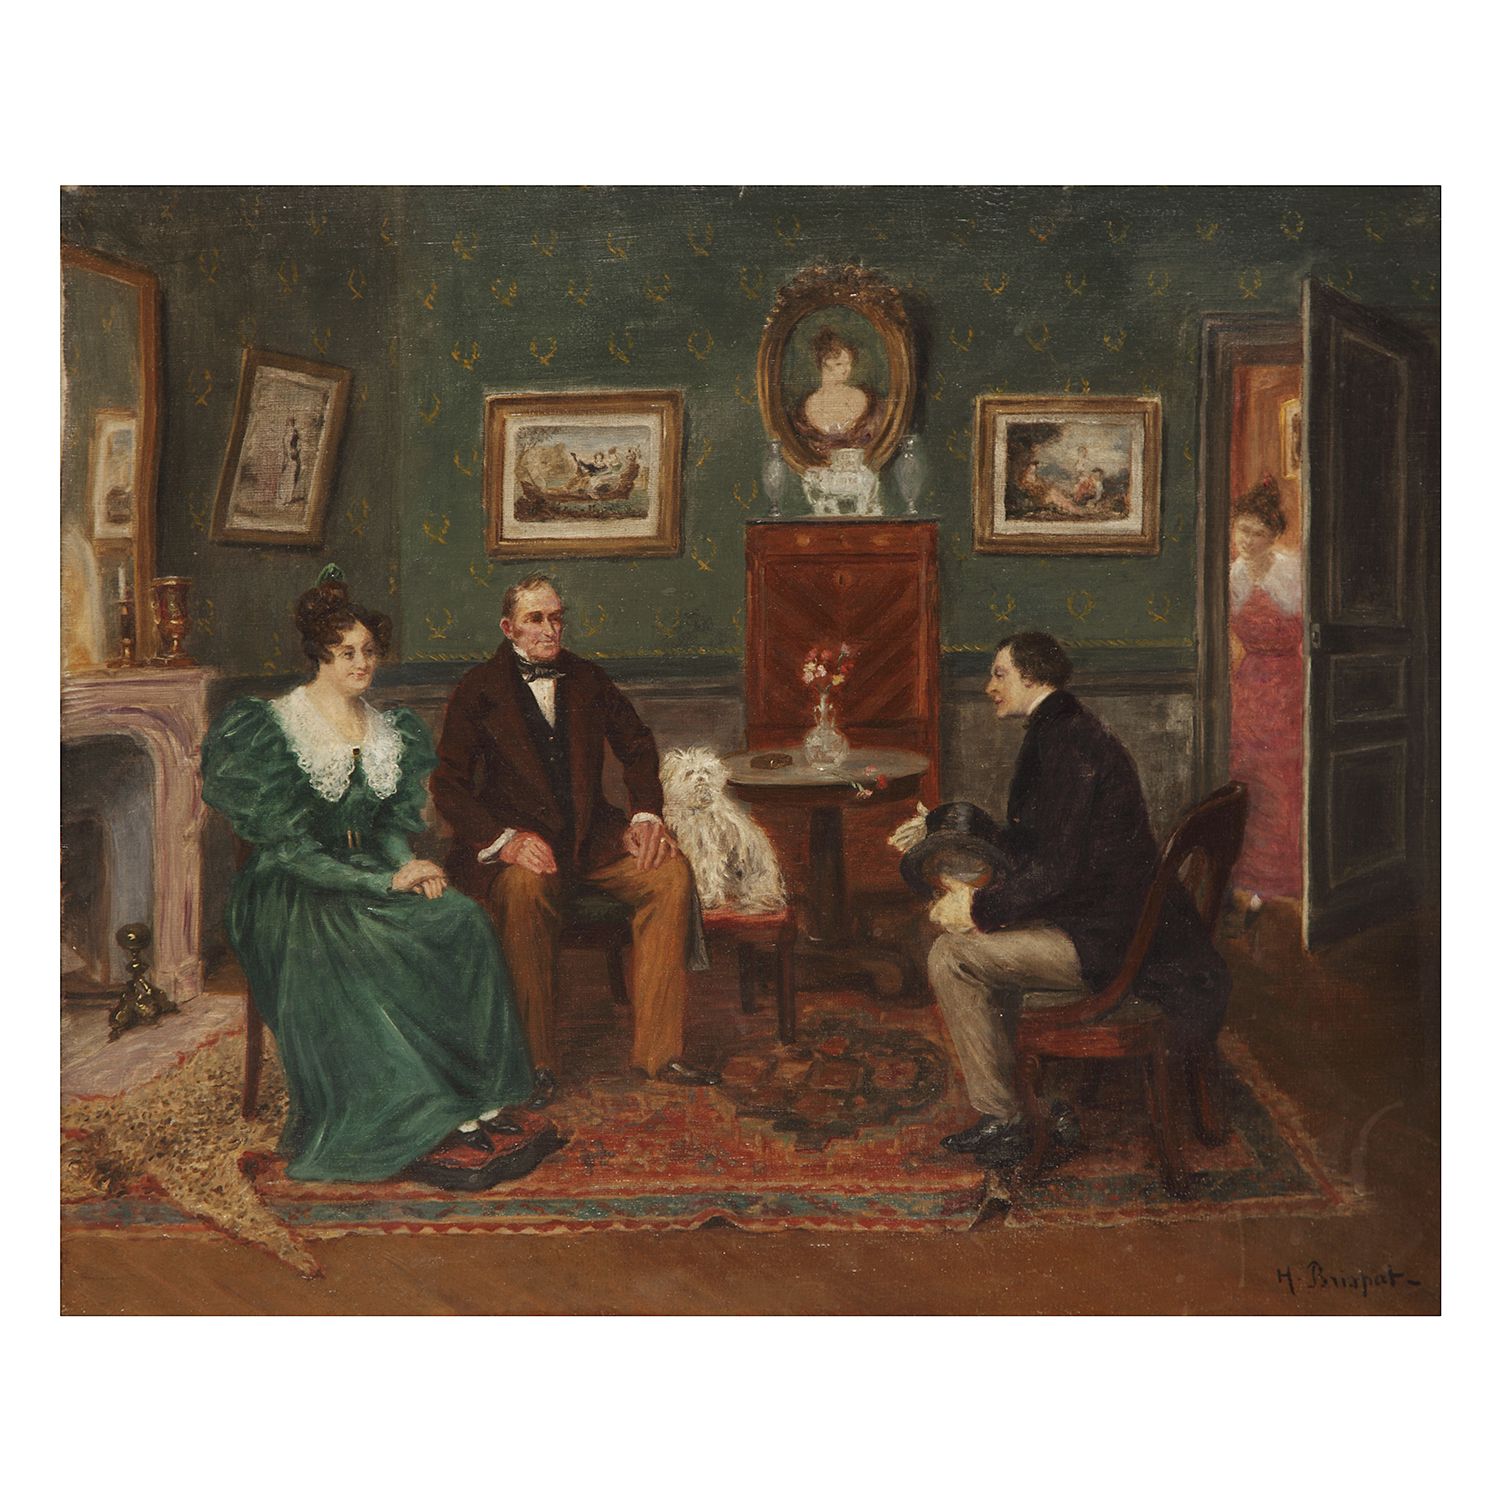 Null 亨利-布鲁斯波特(1846-1928)

求婚

布面油画

右下方有签名

布面油画；右下方有签名

60 x 72 cm - 24 x 28 3/&hellip;